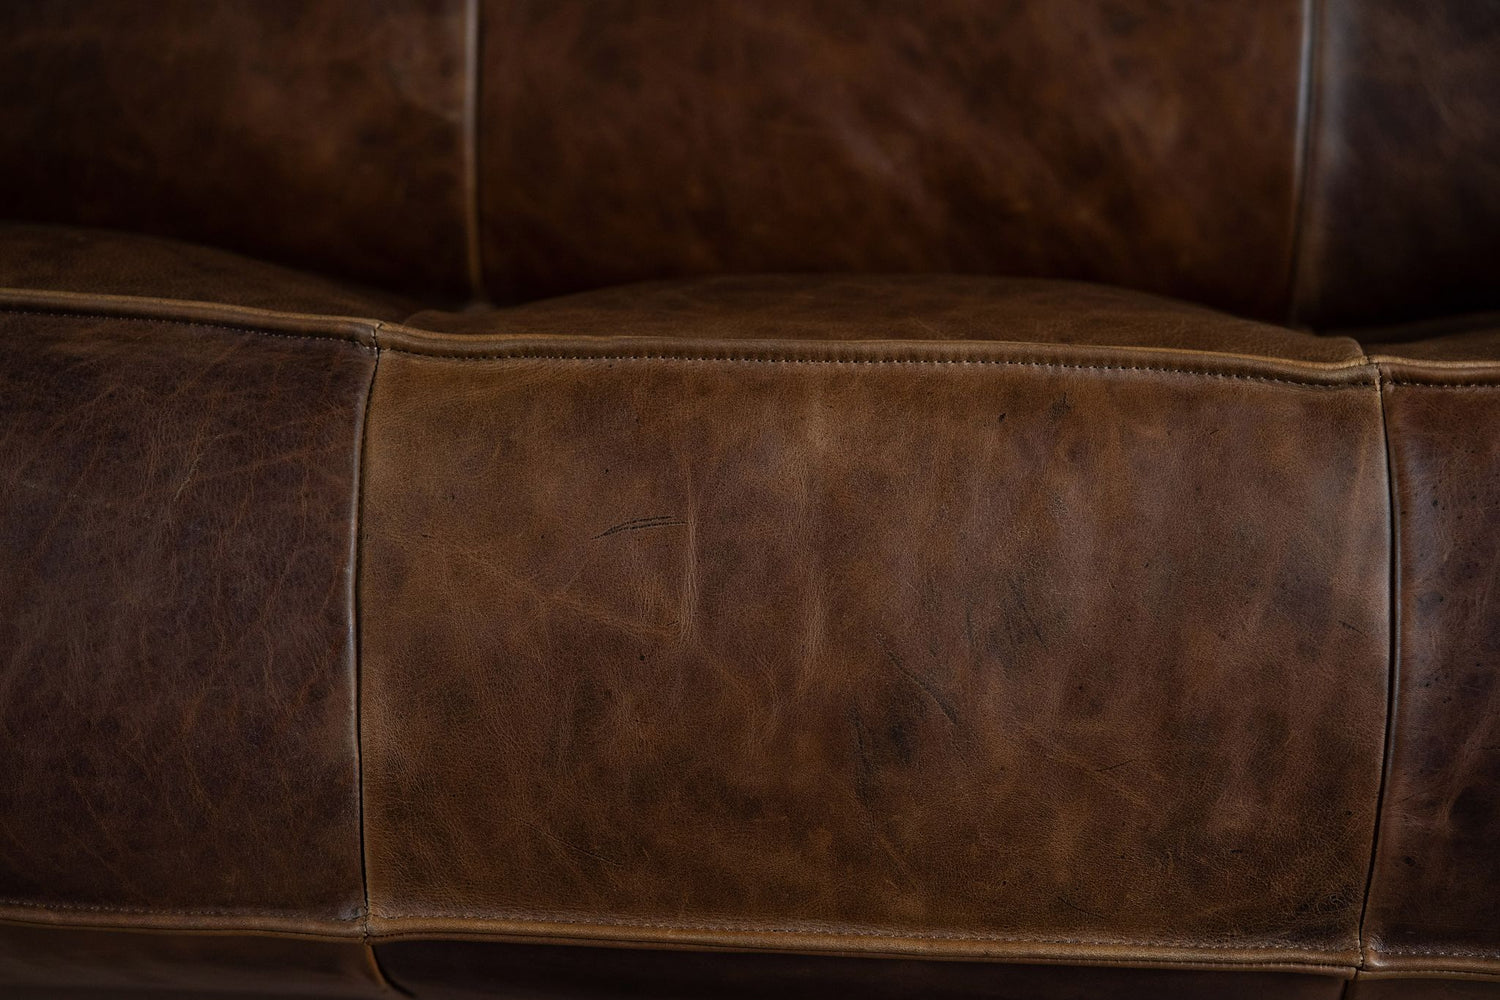 Capa Sofa Chocolate Brown